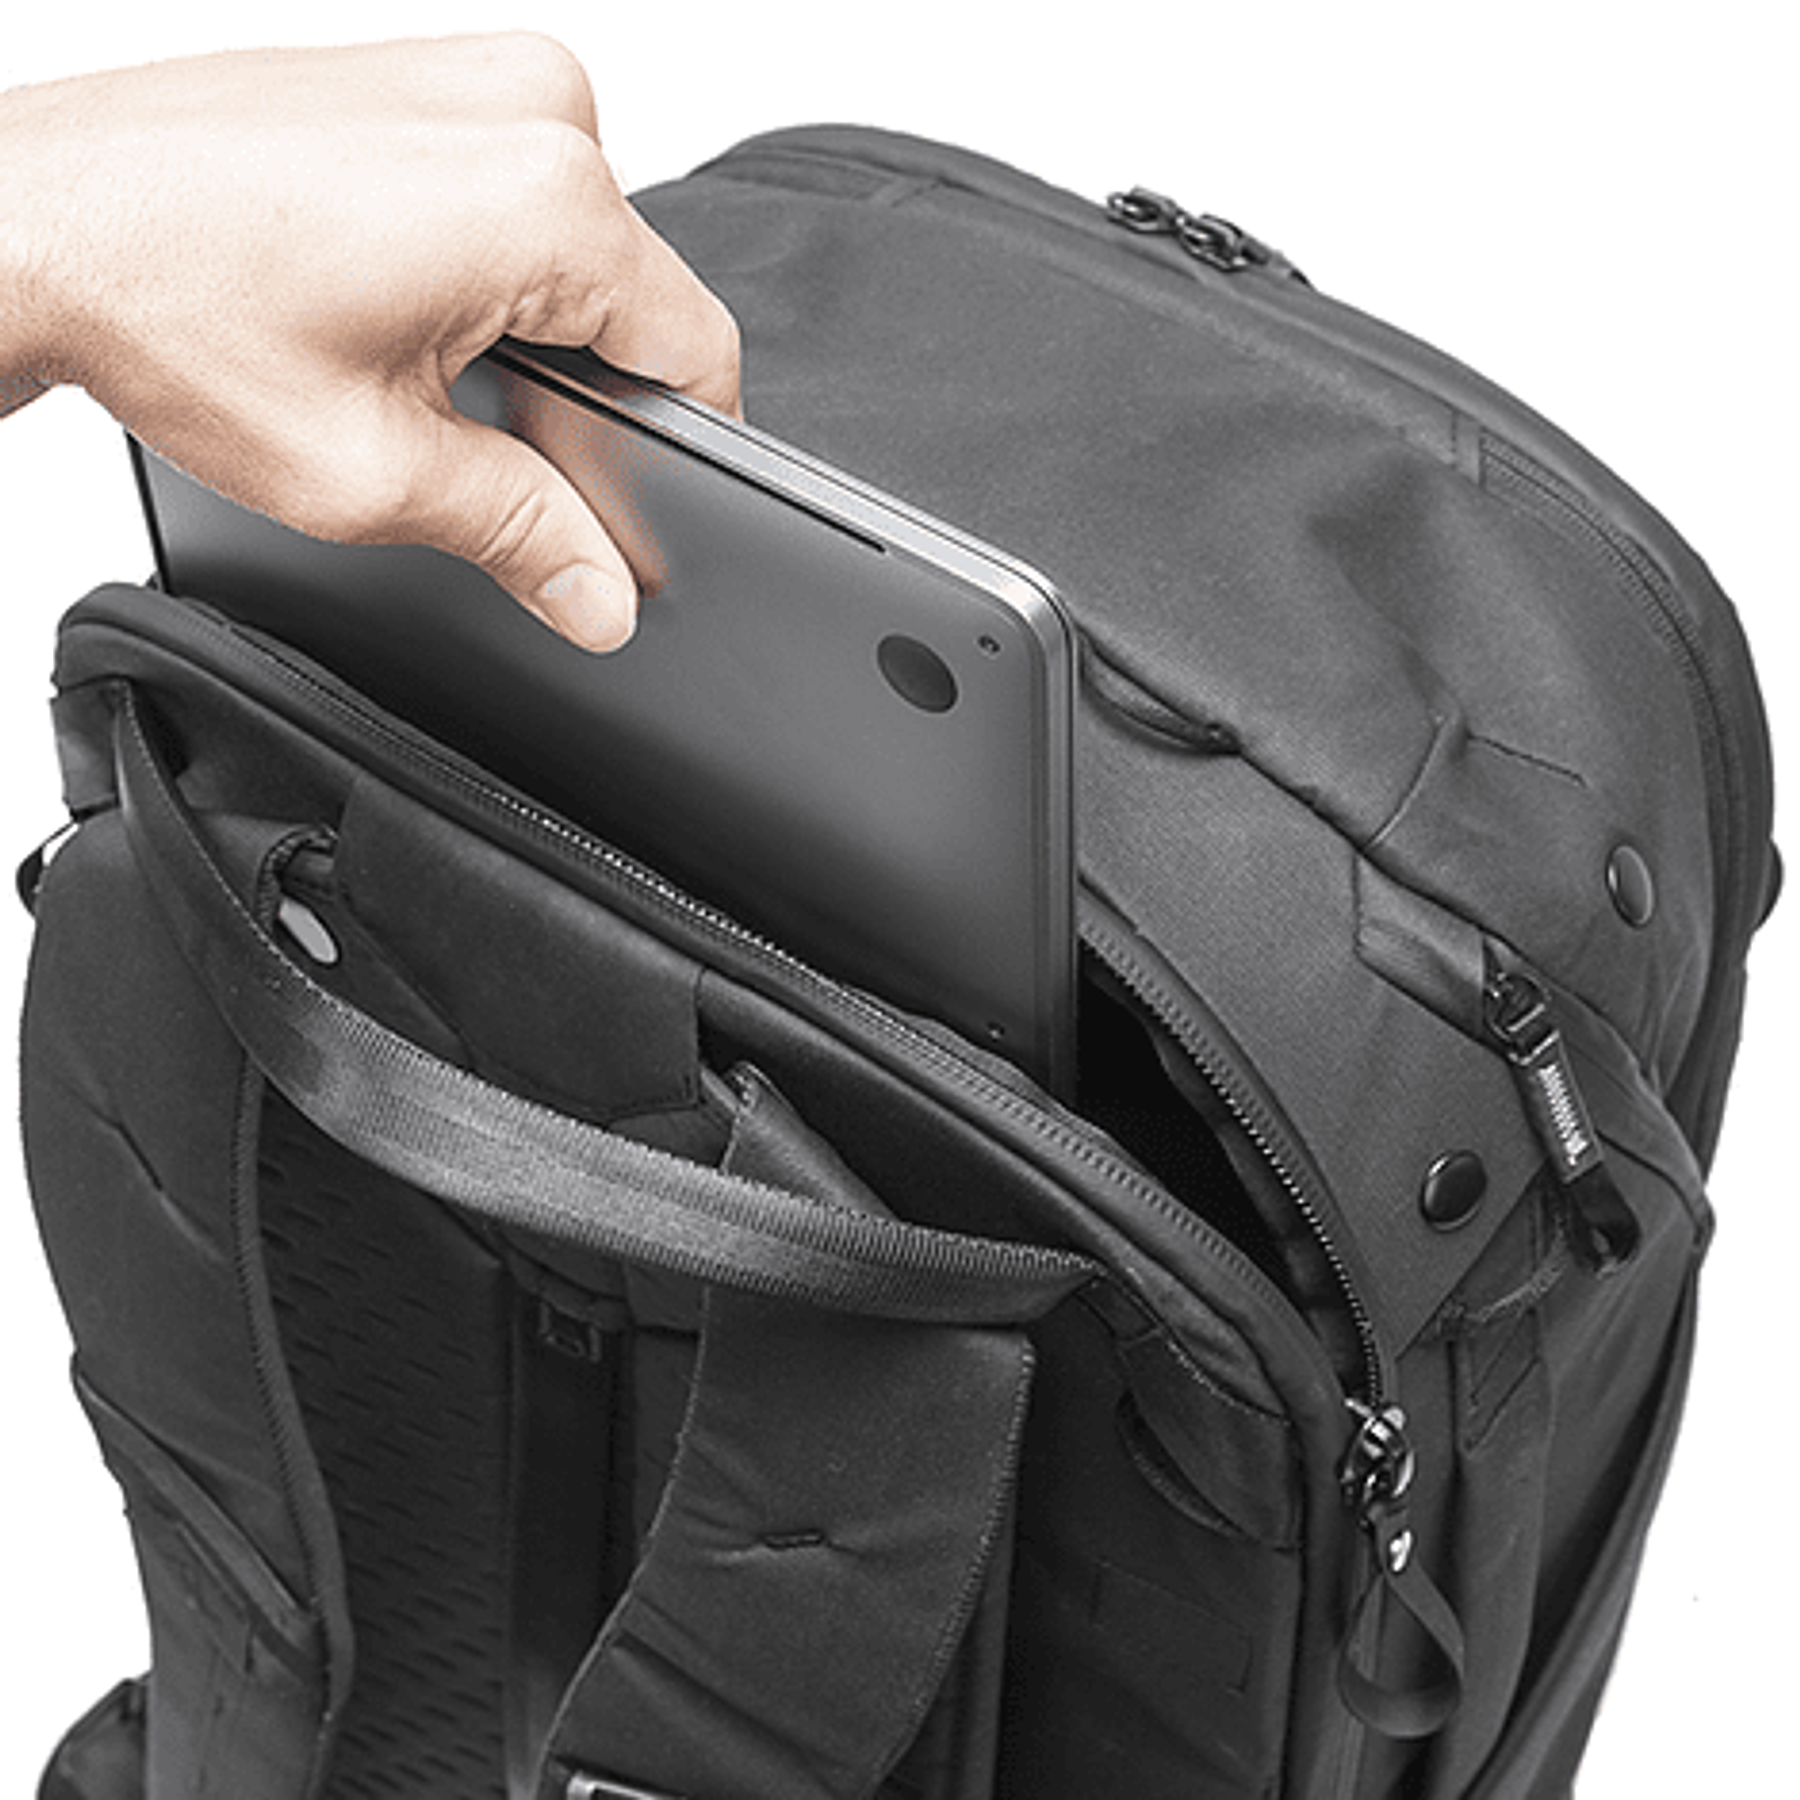 Mochila Peak Design Travel Backpack 45L